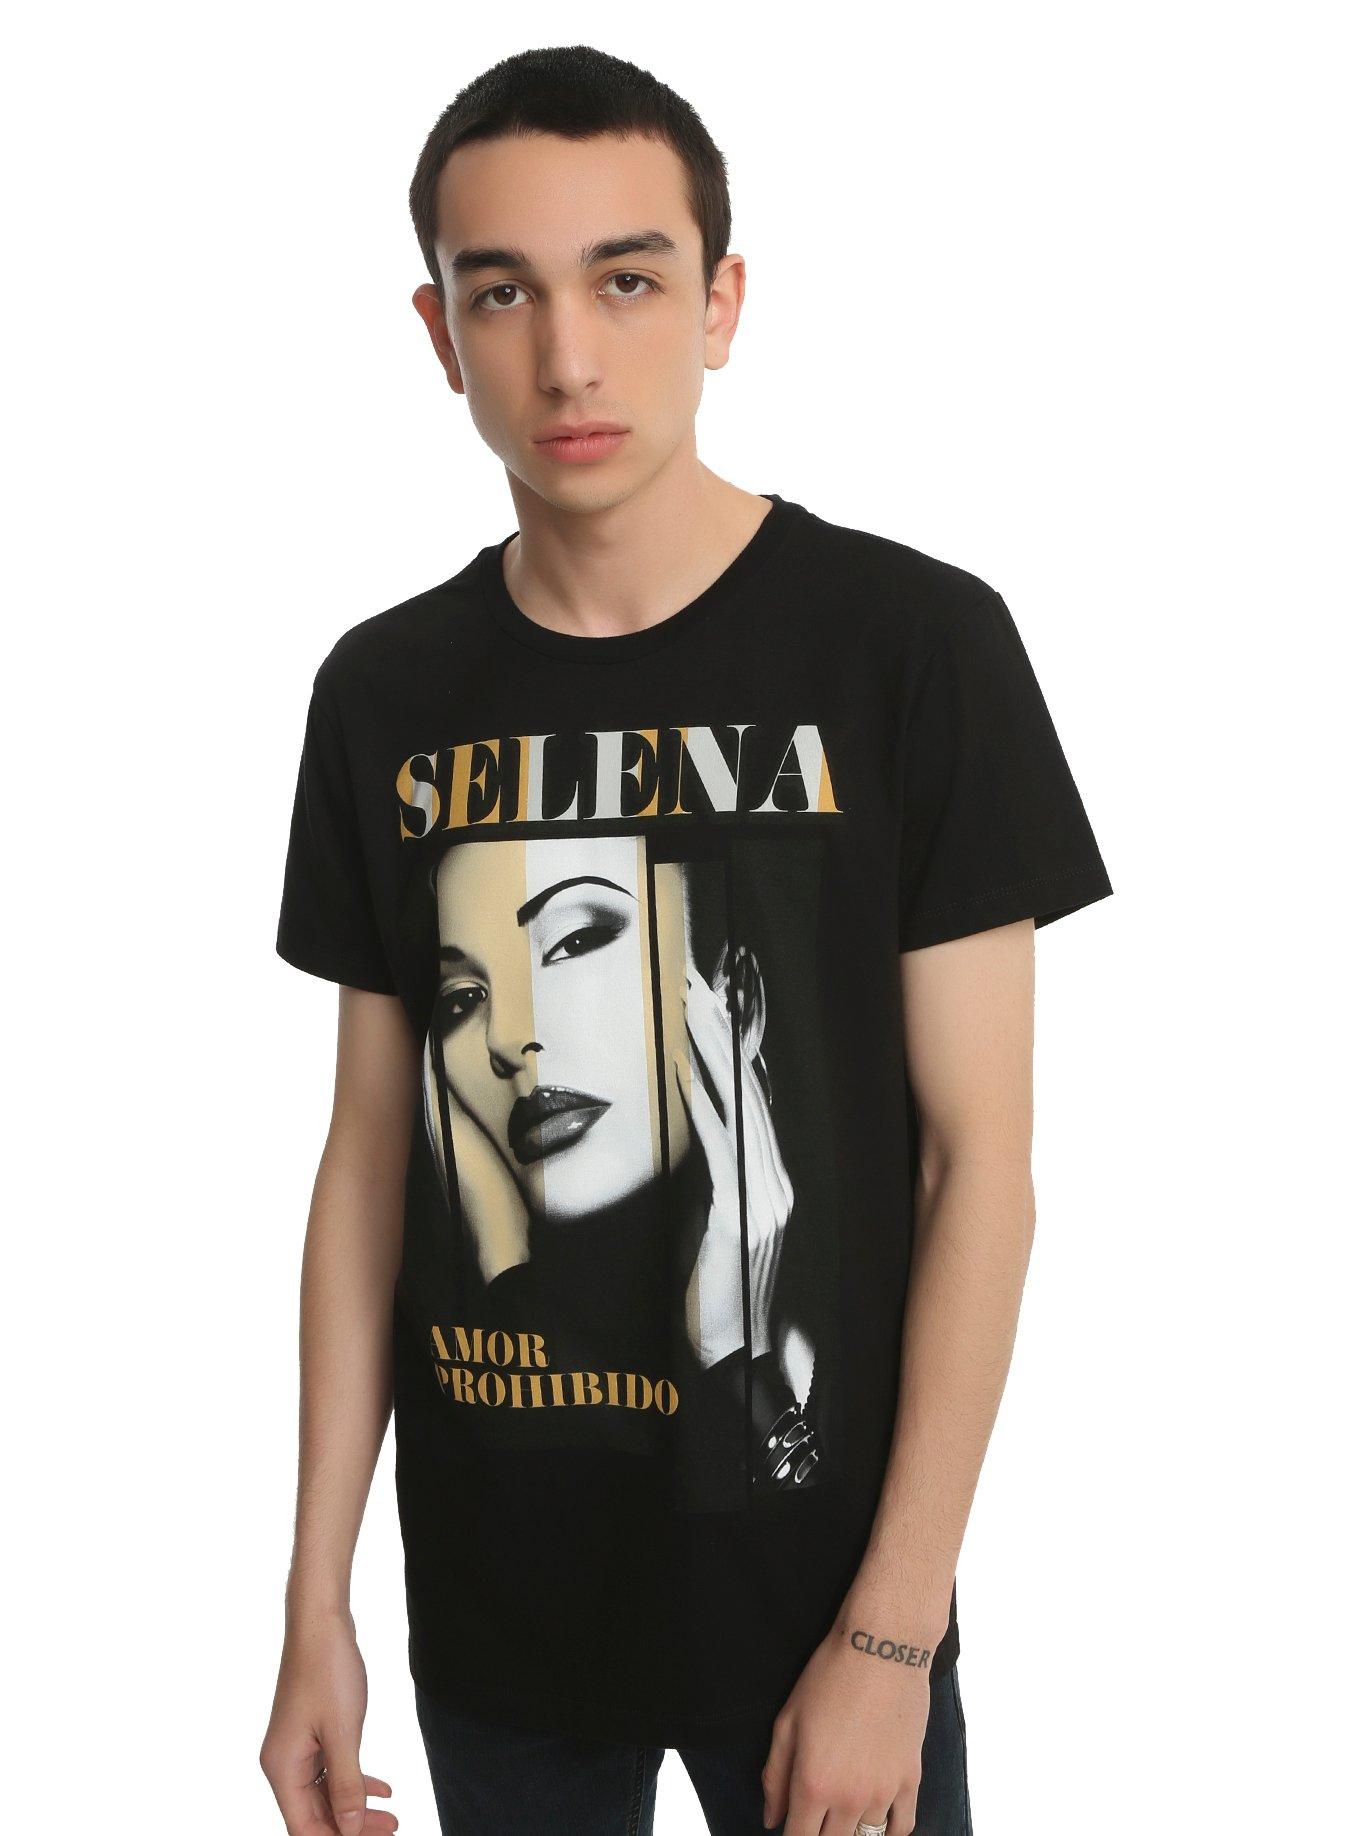 Selena Amor Prohibido T-Shirt, , alternate